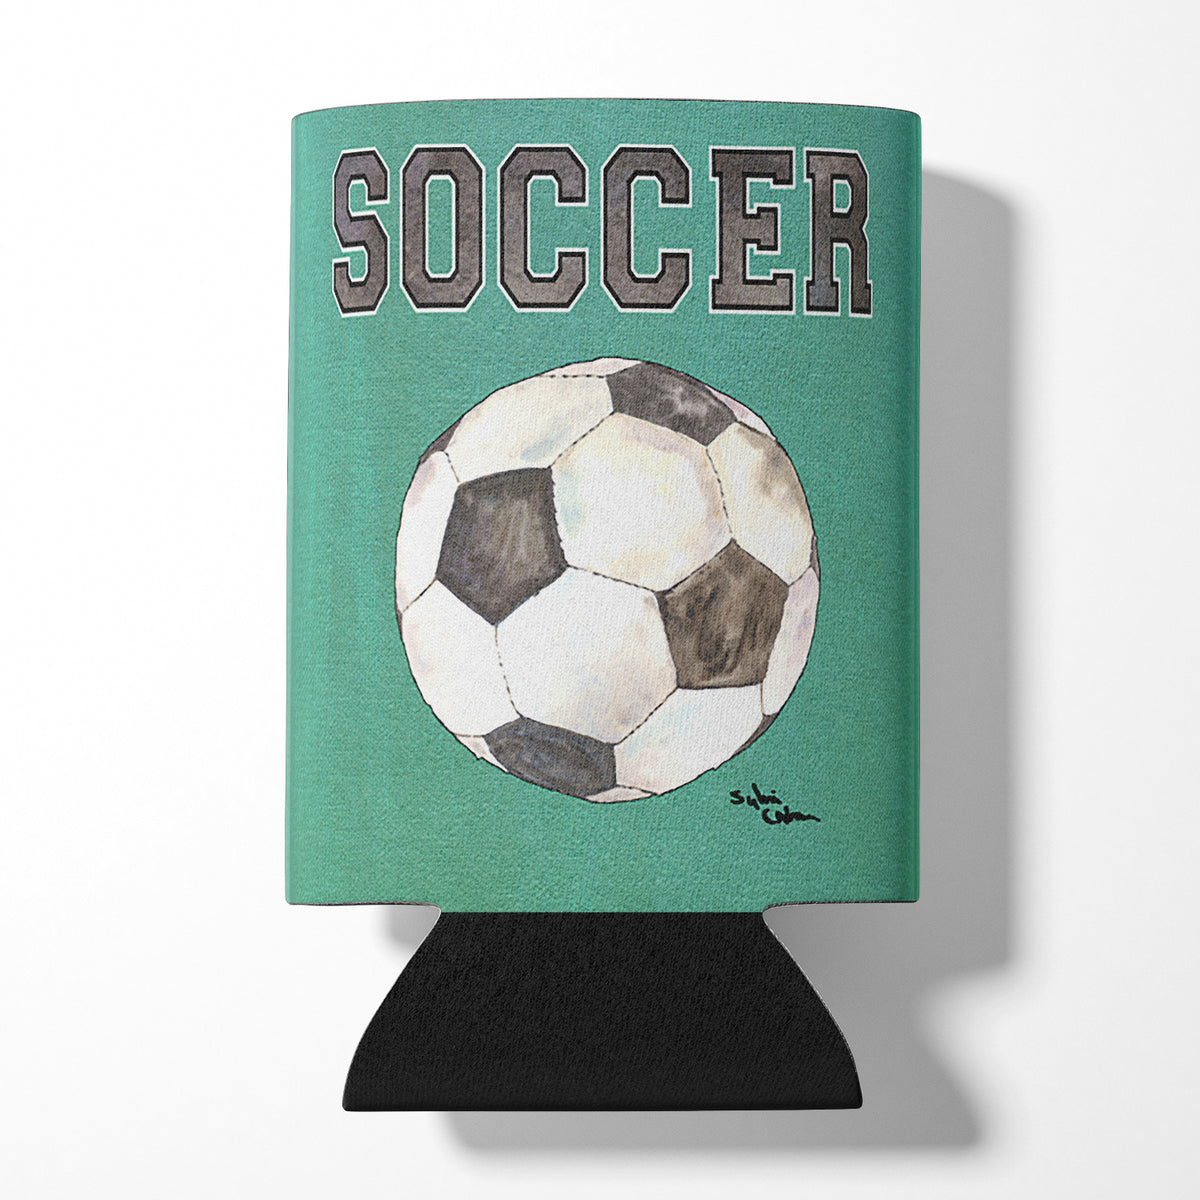 Soccer Can or Bottle Beverage Insulator Hugger